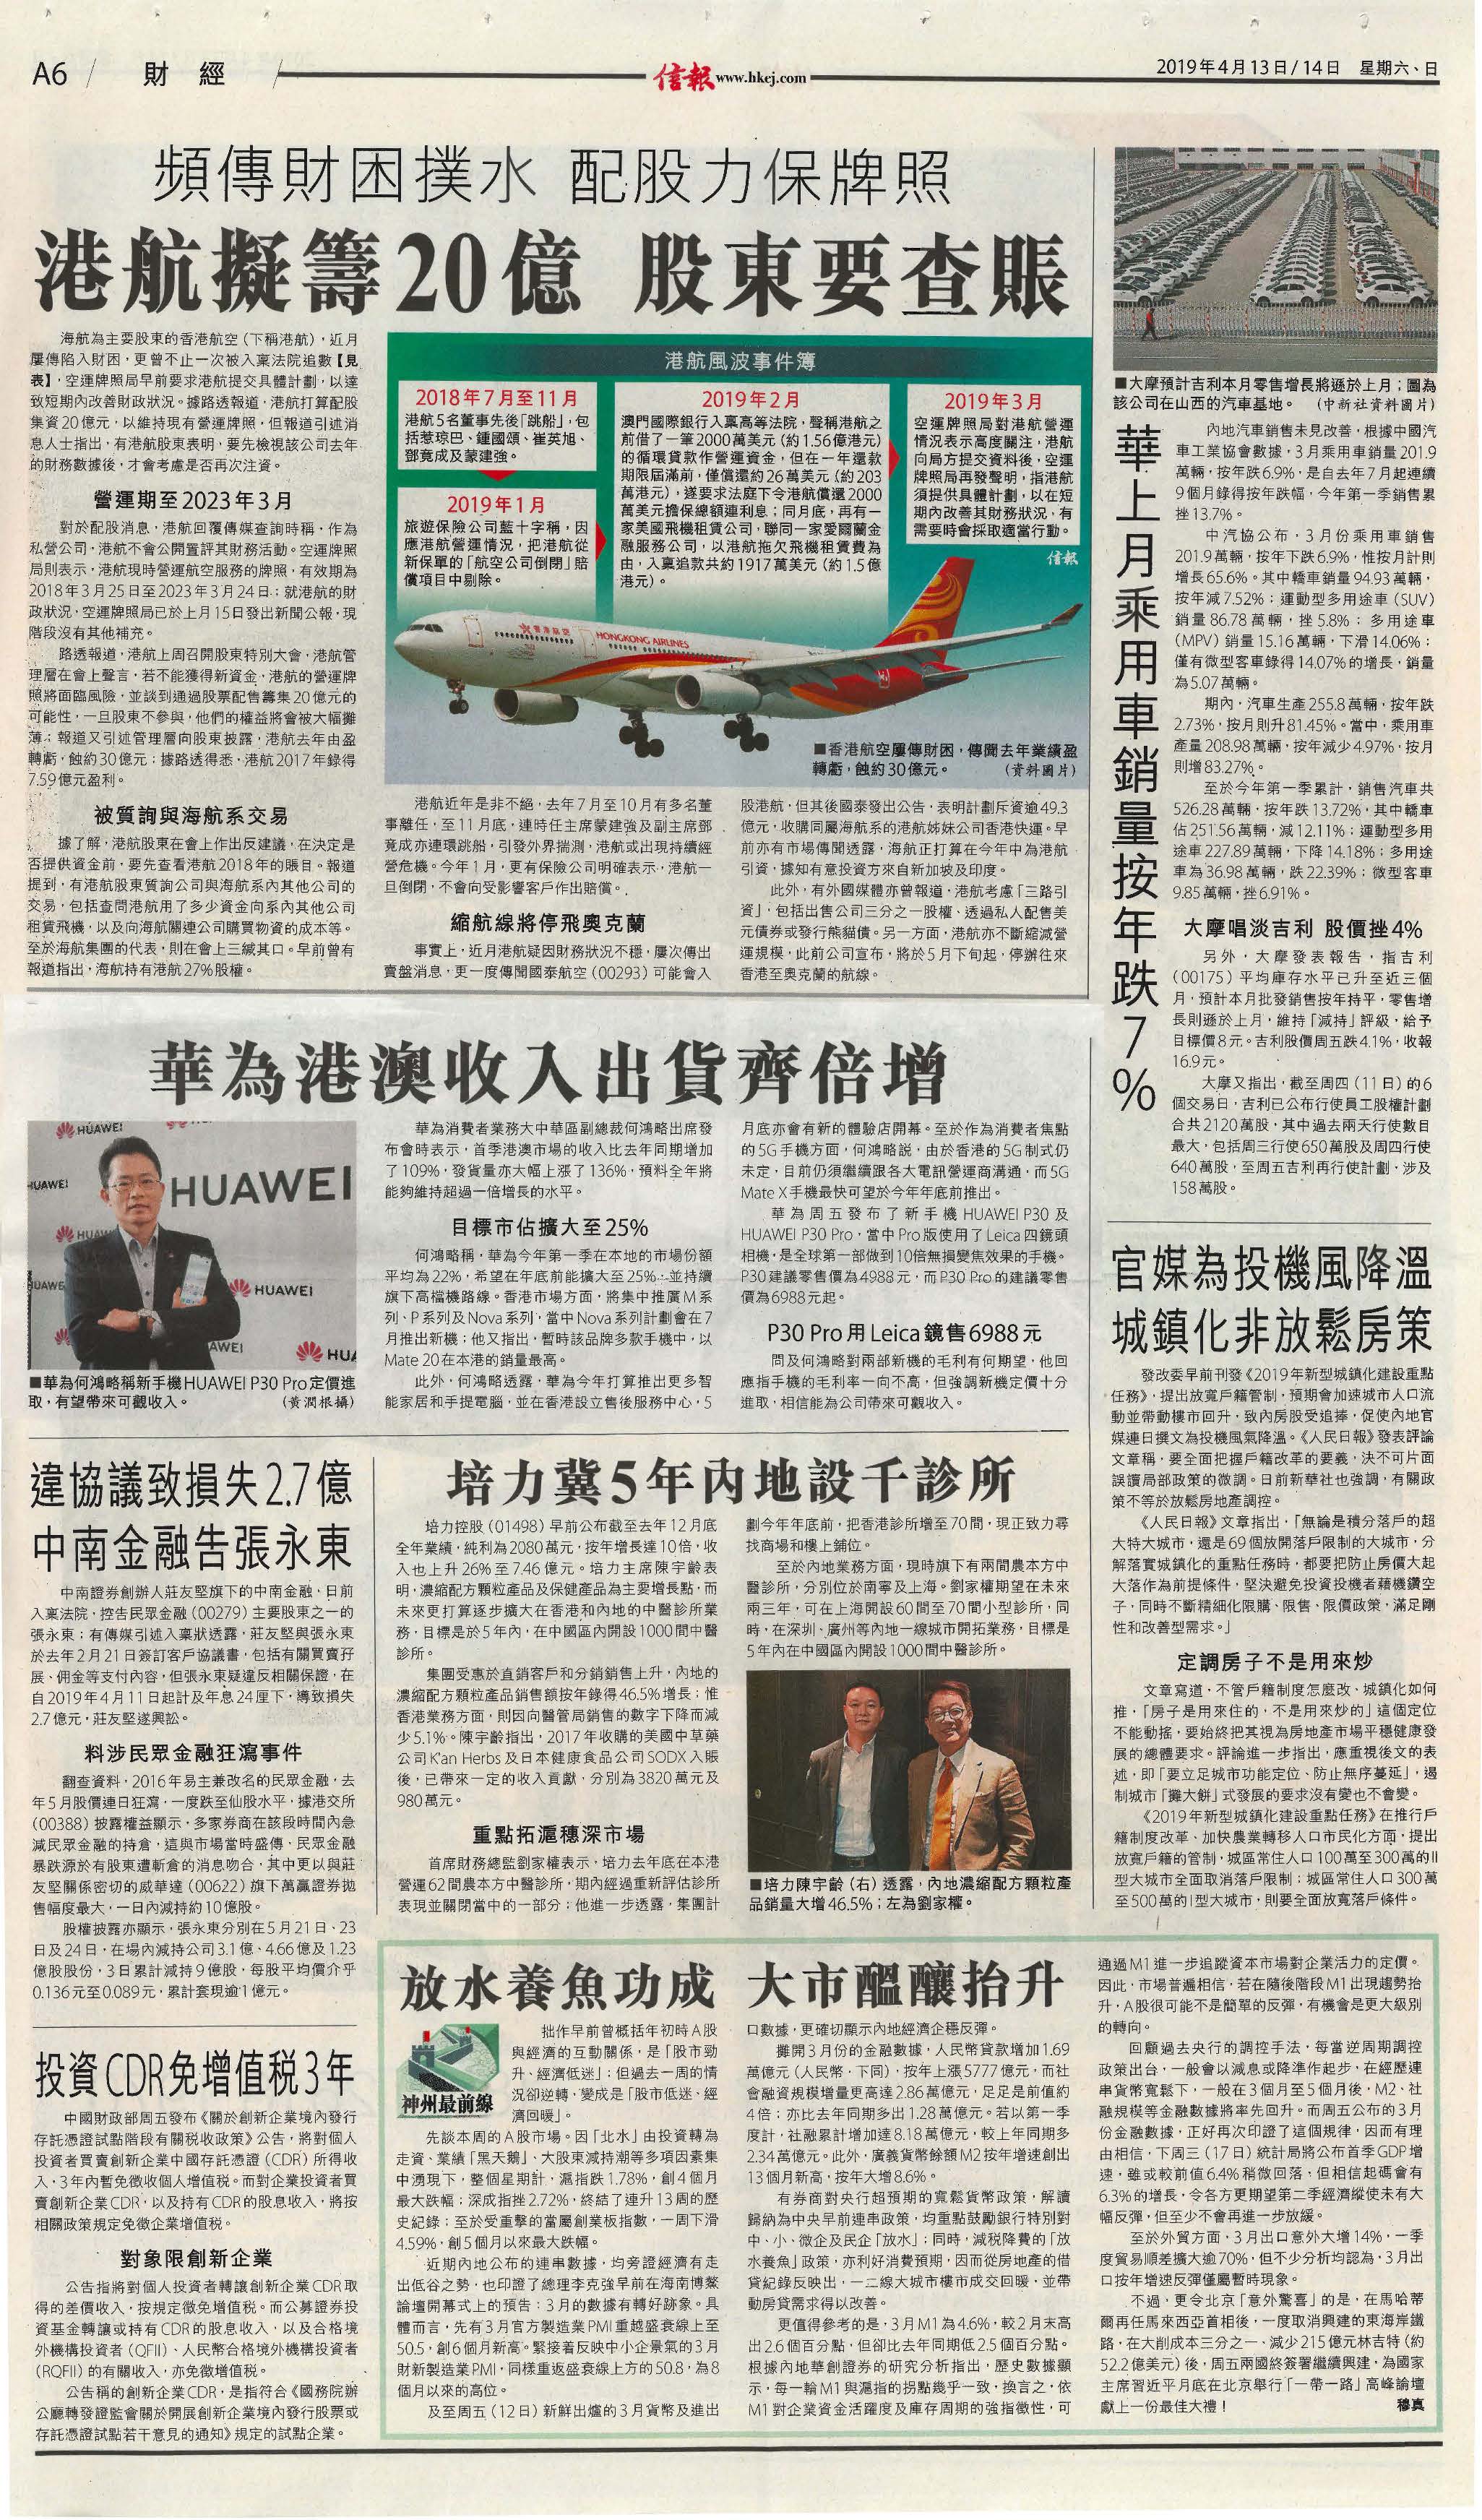 2019-04-13 HK Economic Journal 信報 pg. A6 '培力冀5年內地設千診所' (13 Apr 2019)